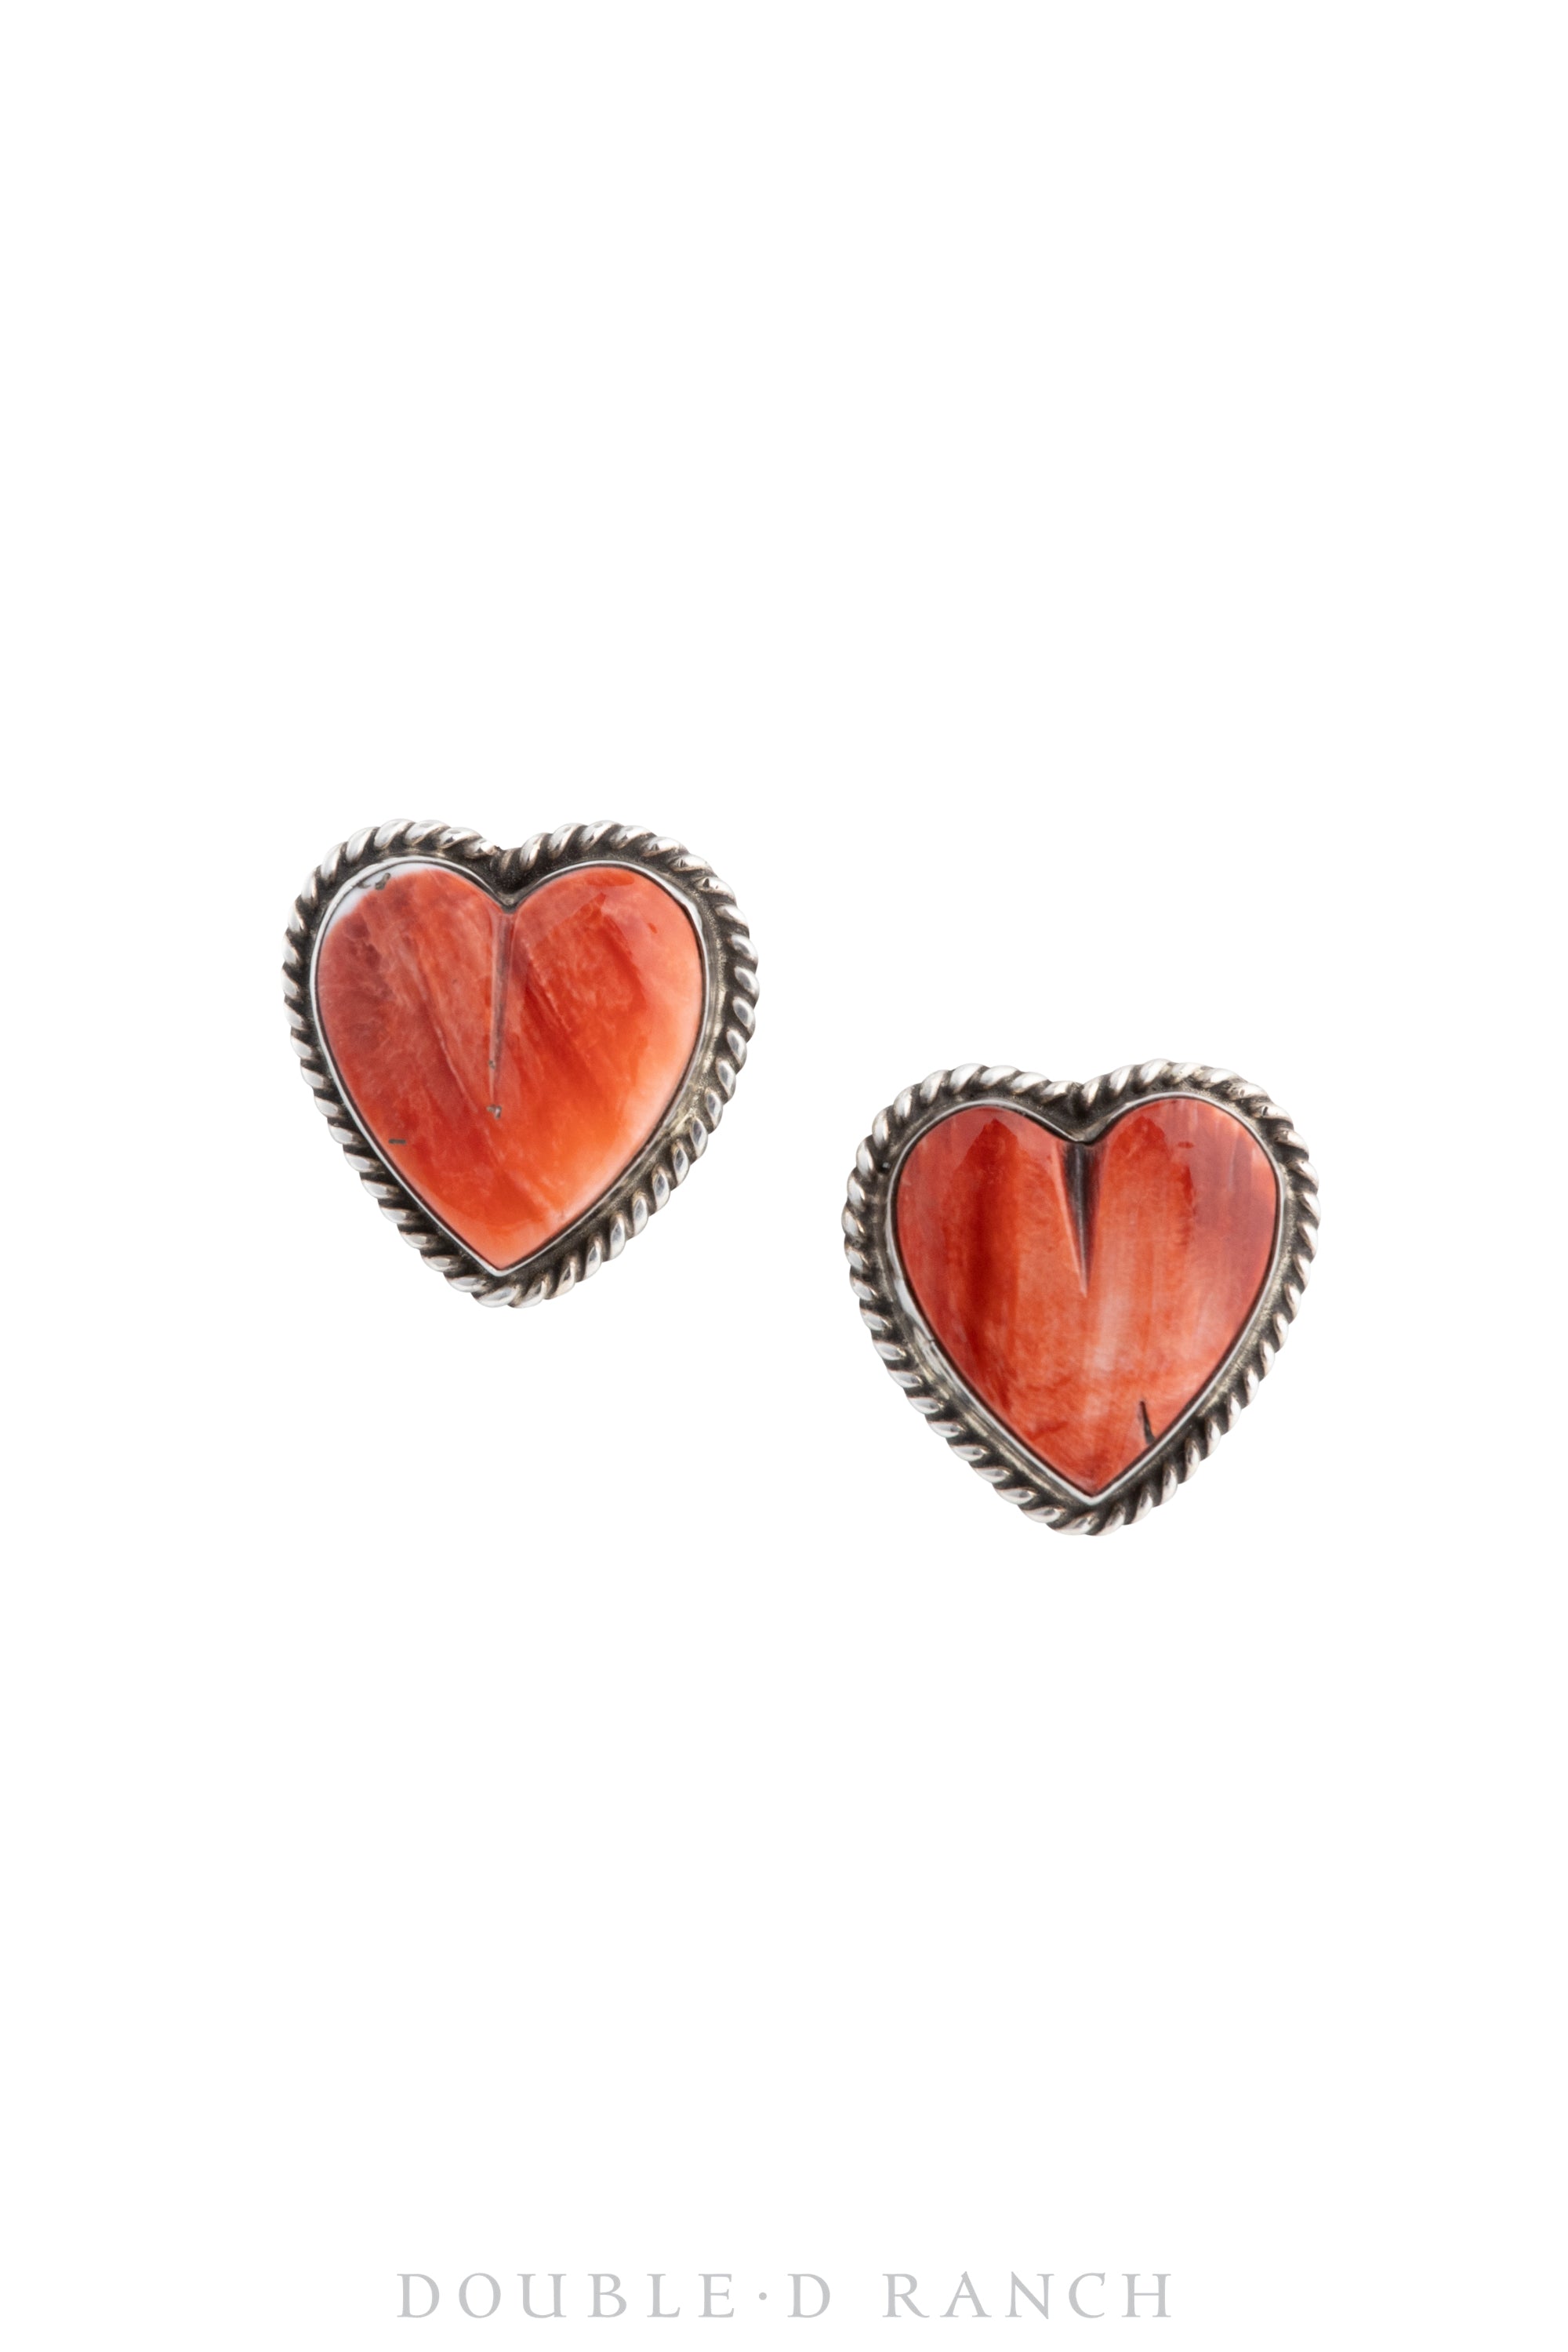 Earrings, Novelty, Heart, Orange Spiny Oyster, Hallmark, New Old Stock, 1608